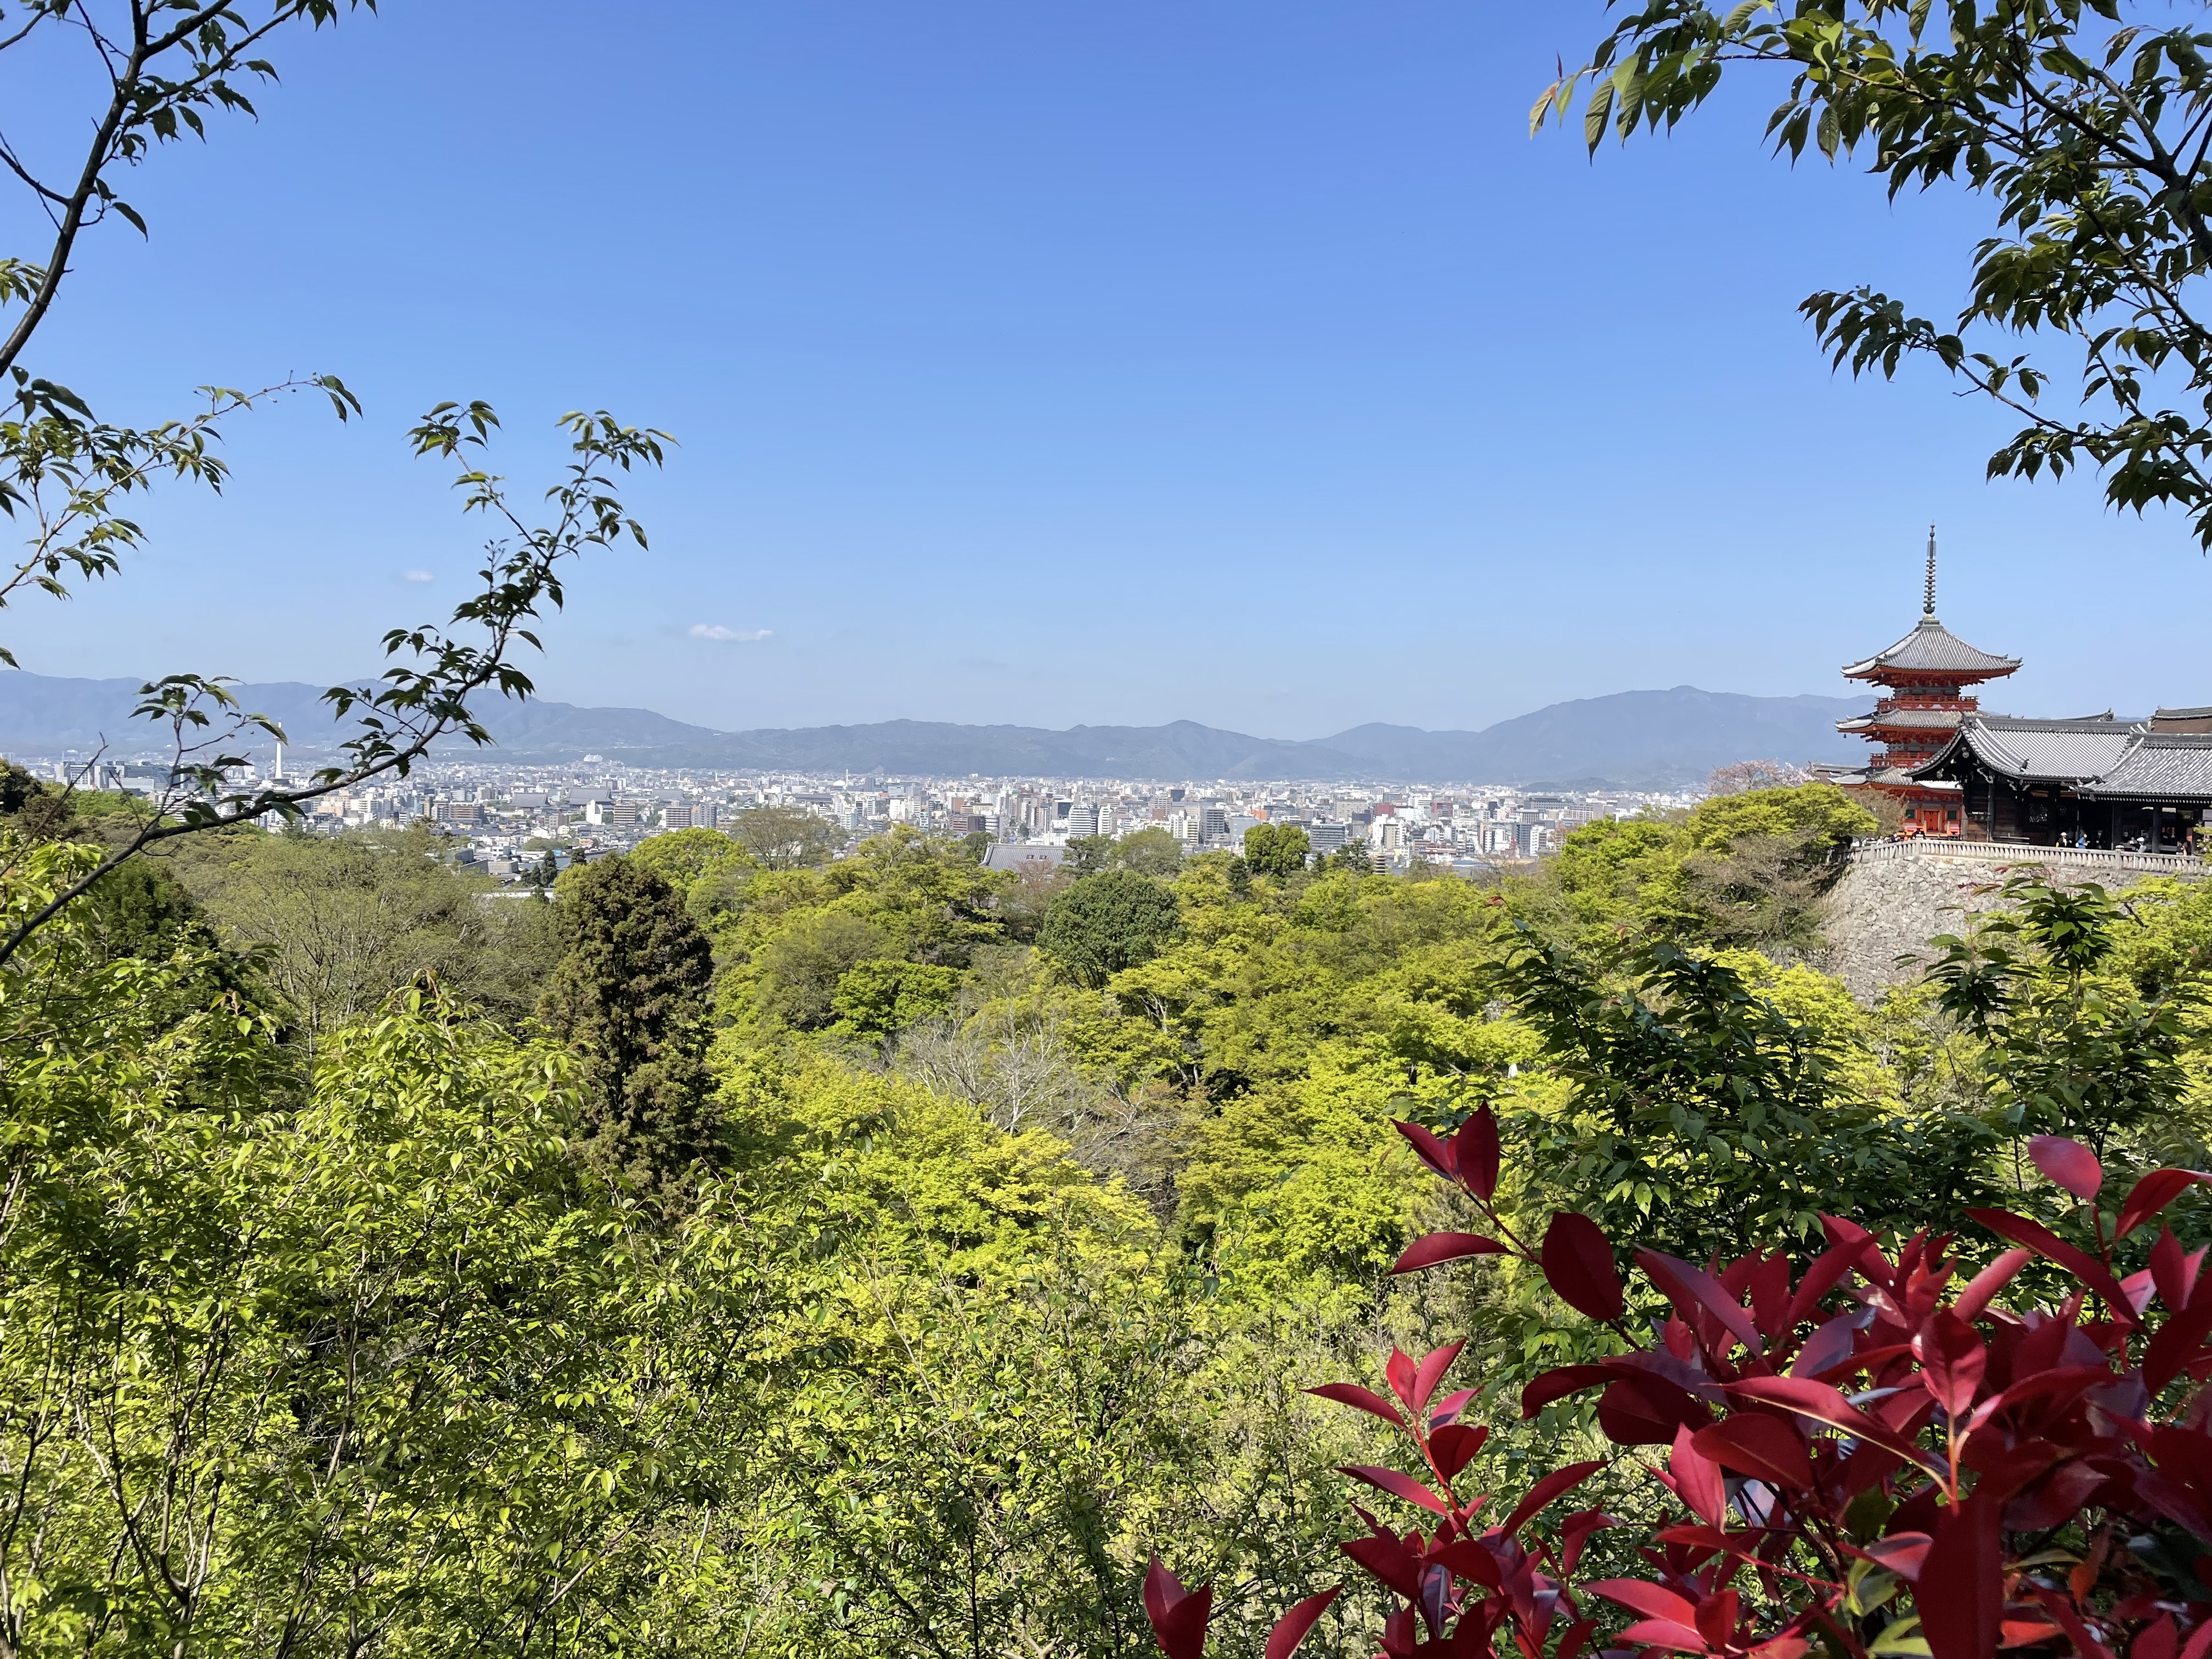 View towards downtown from Kiyomizu-Dera